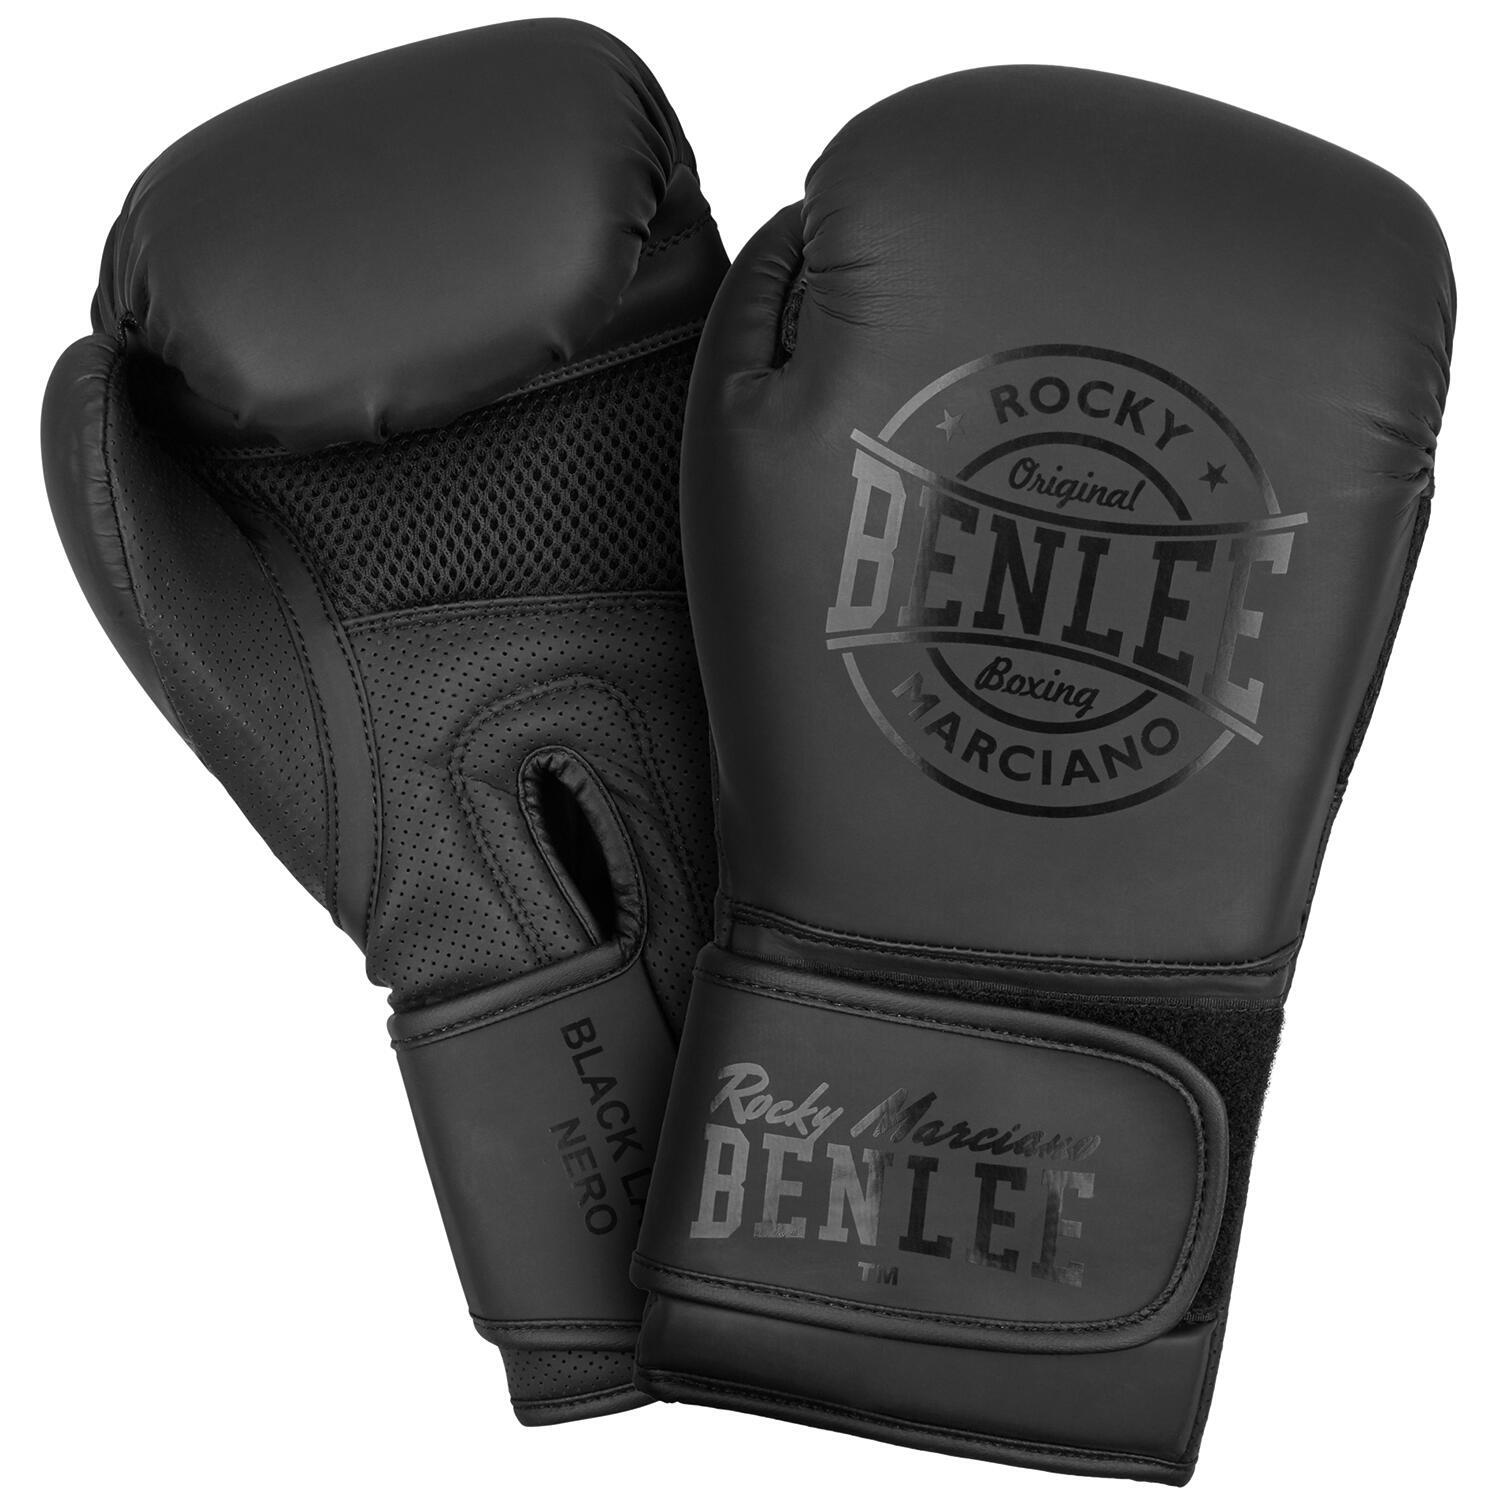 Боксерские перчатки BenLee Black Label Nero 12 унций, черный боксерские перчатки twins special bgvla 2 black white 16 унций